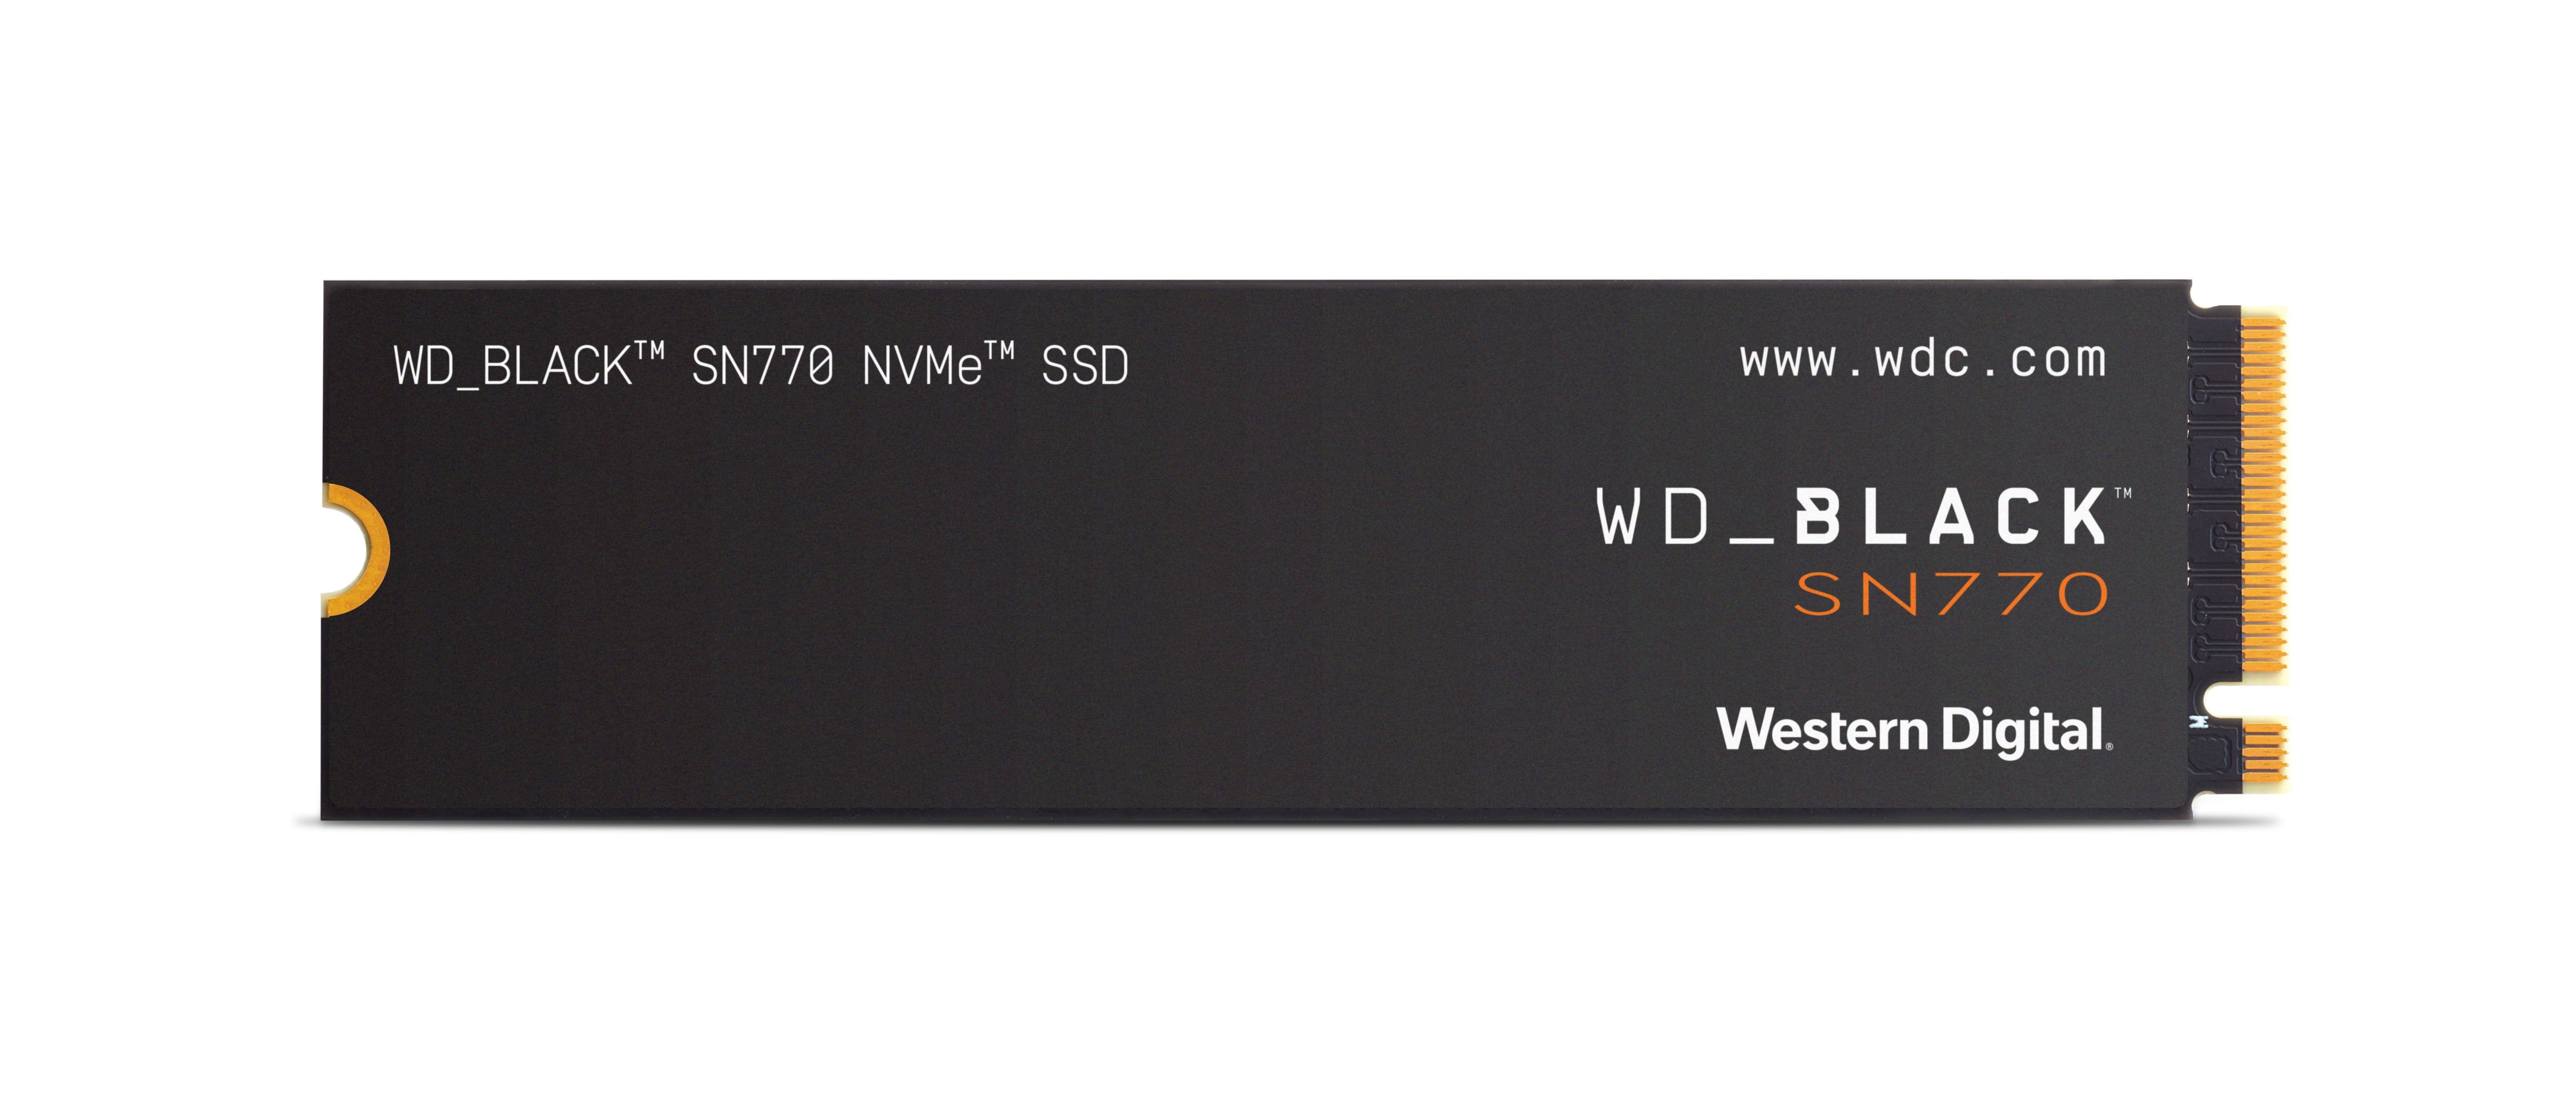 Western Digital-WD Black Internal Gaming Solid State Drive, SN770